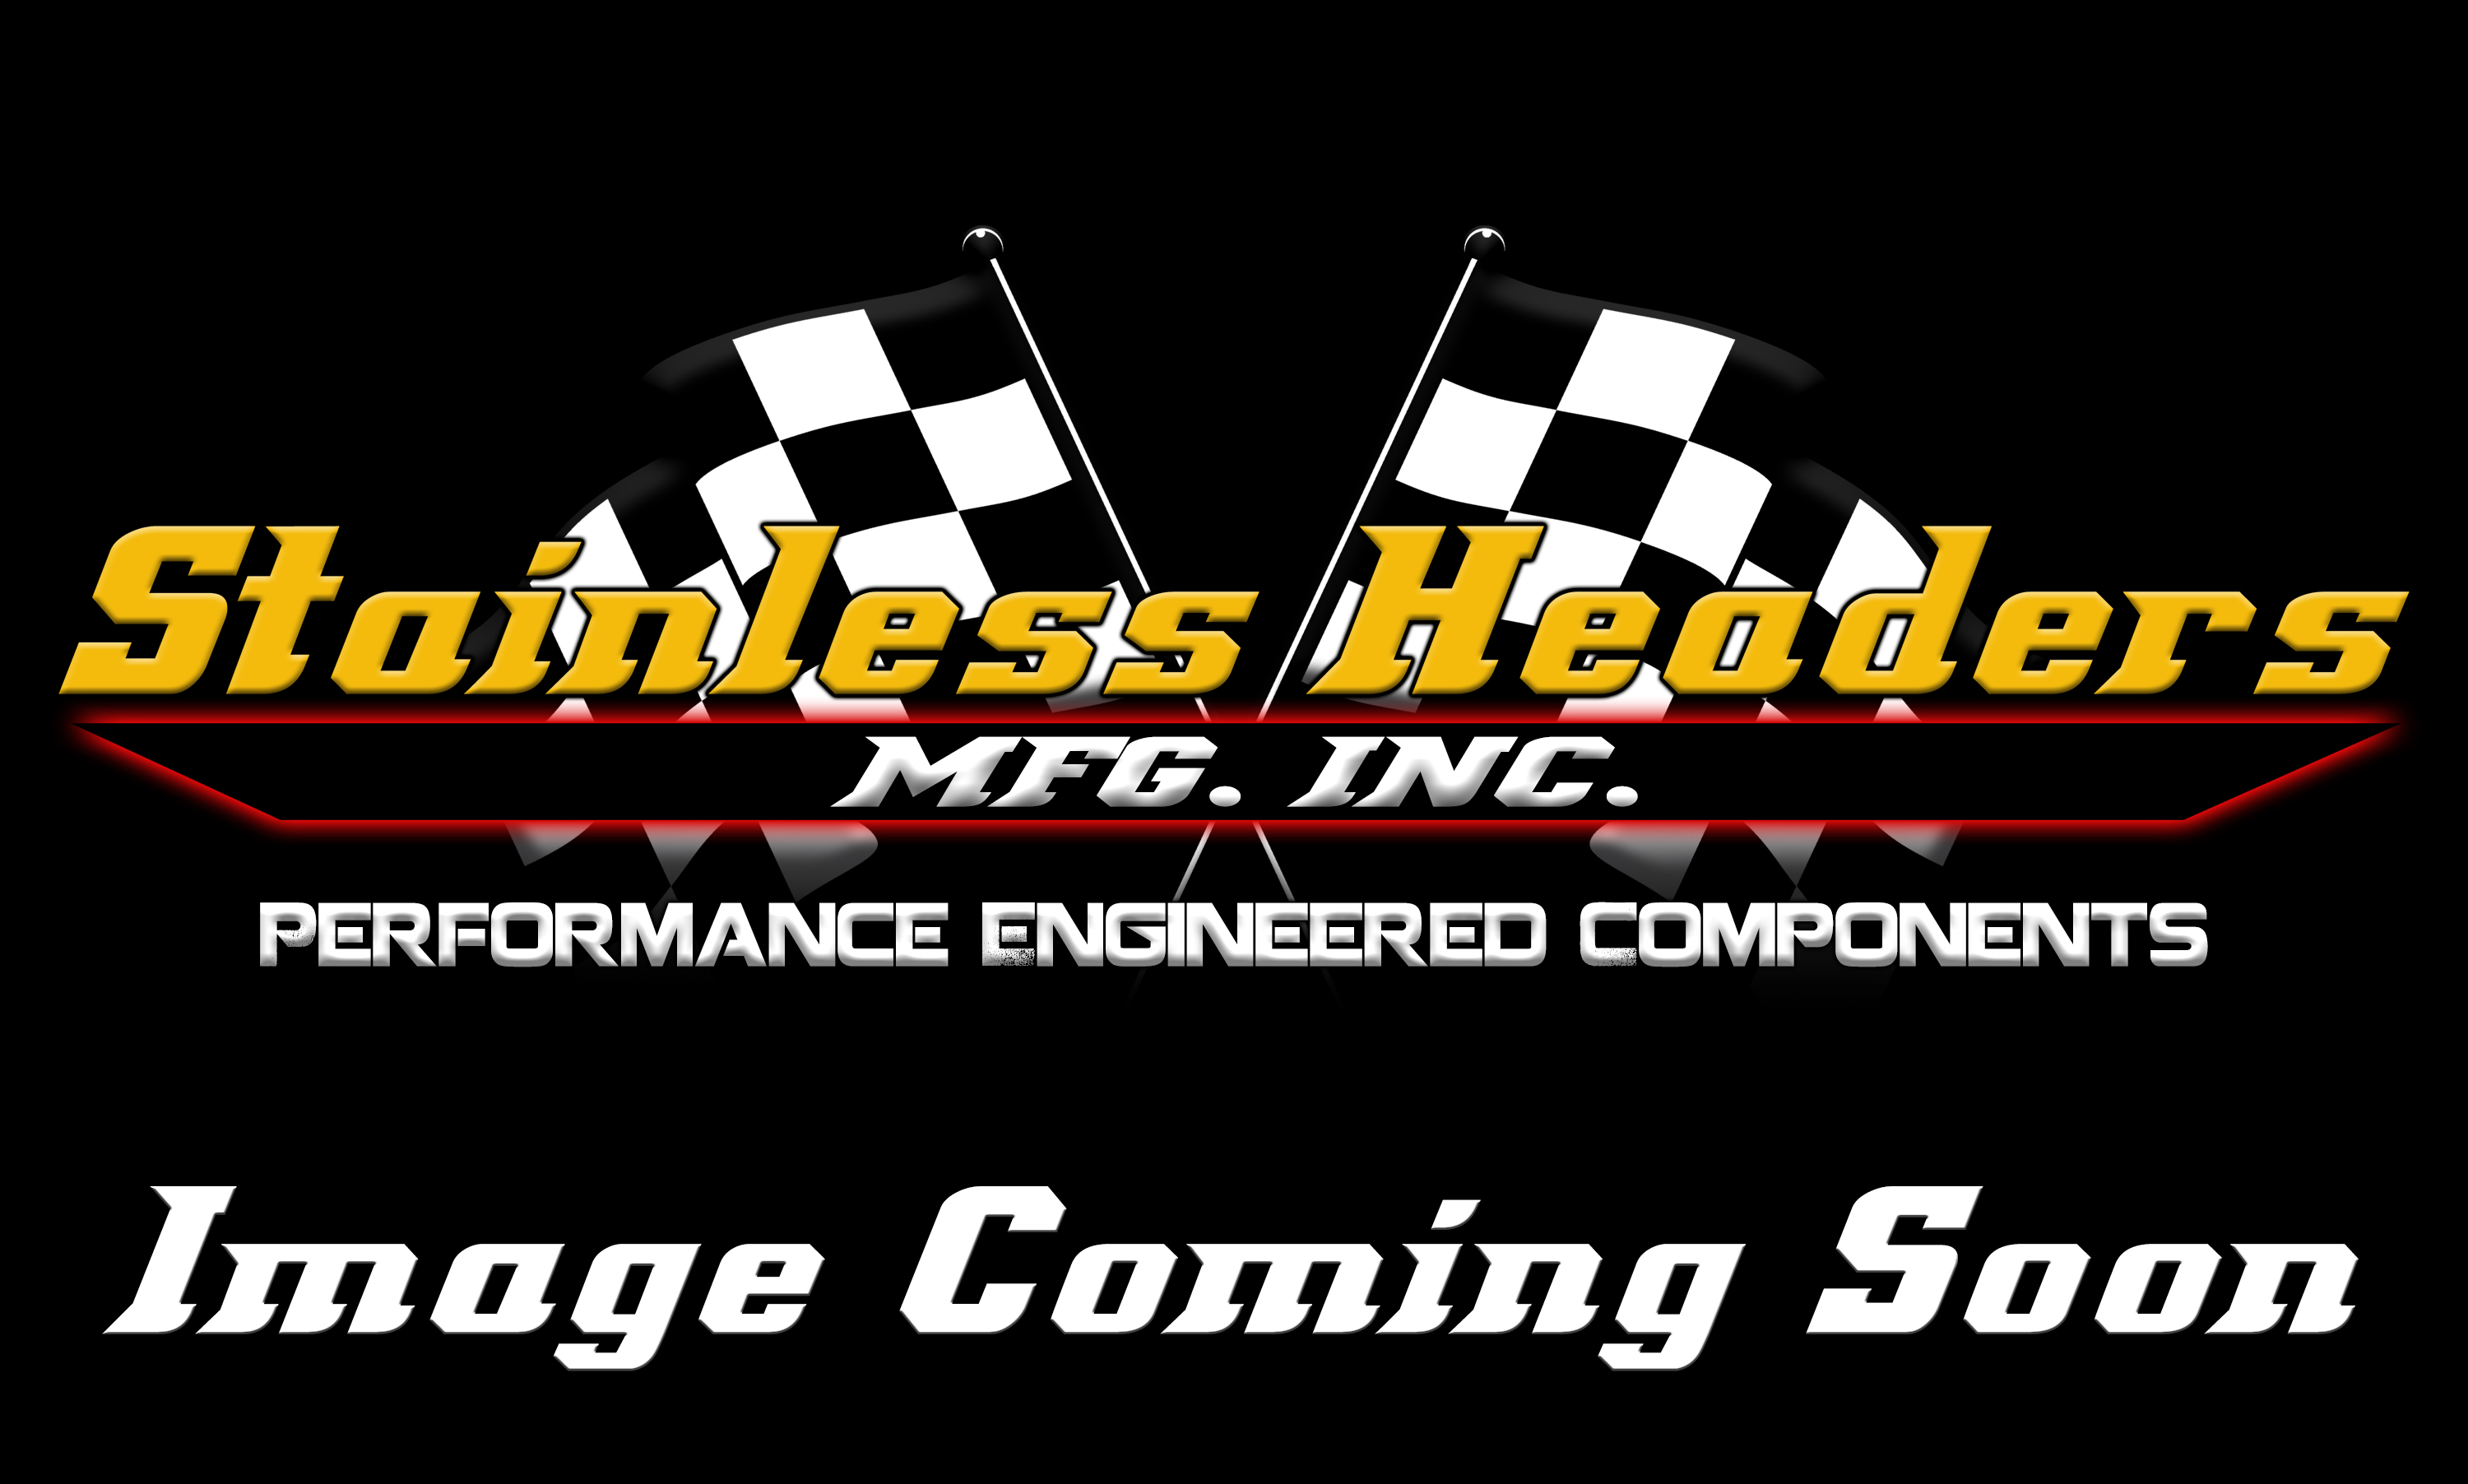 Stainless Headers - Small Block Chevy 18-Degree Custom Turbo Header Build Kit - Image 2